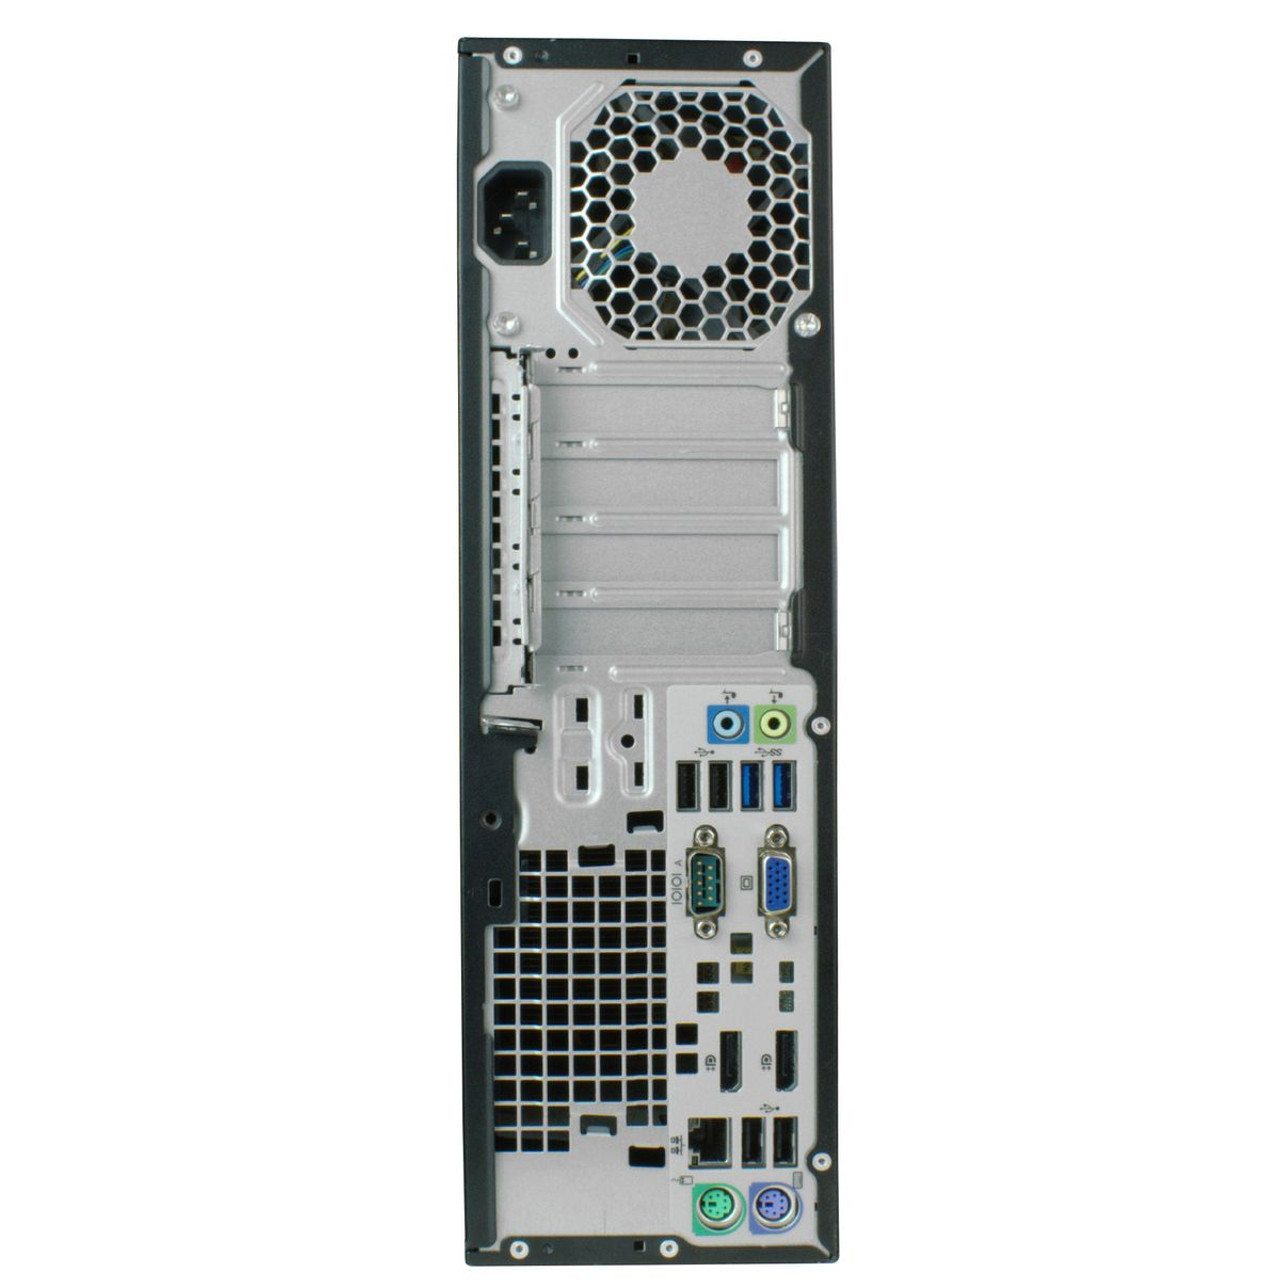 HP® ProDesk 600 G1 Core i5-4570, 16GB RAM, 512GB SSD, Desktop Tower Bundle product image